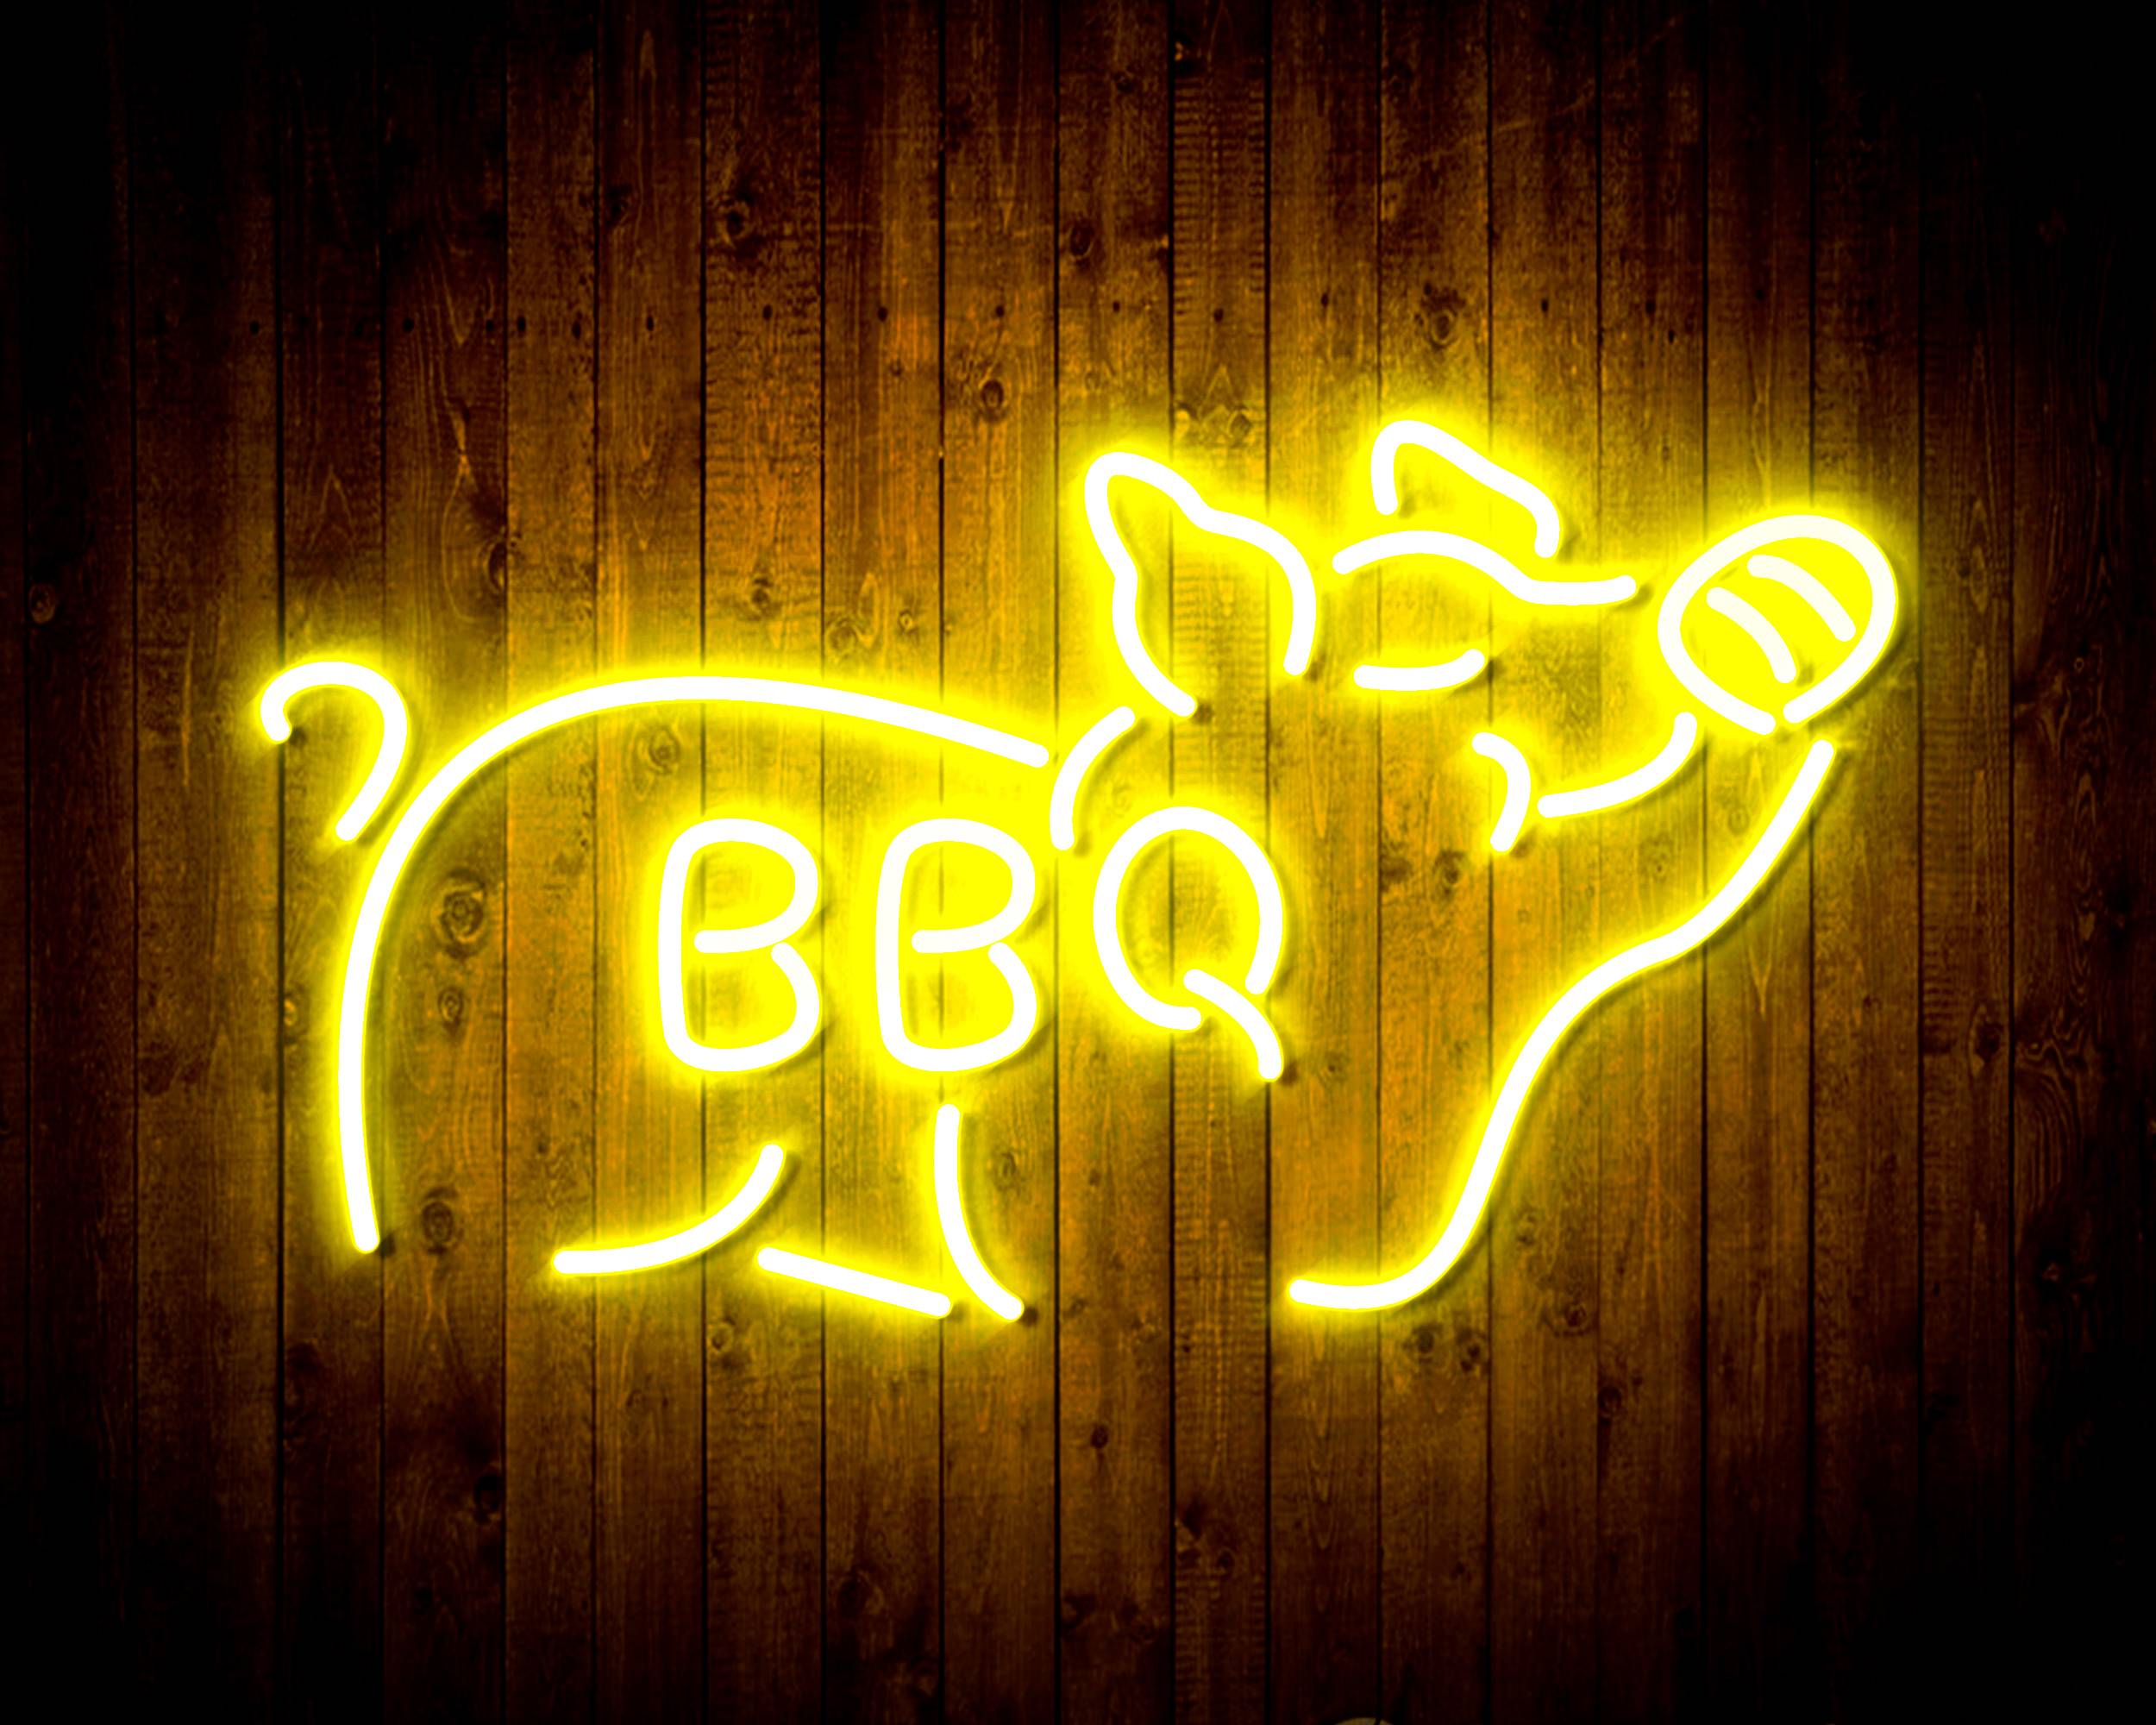 Budweiser with Pig Handmade Neon Flex LED Sign